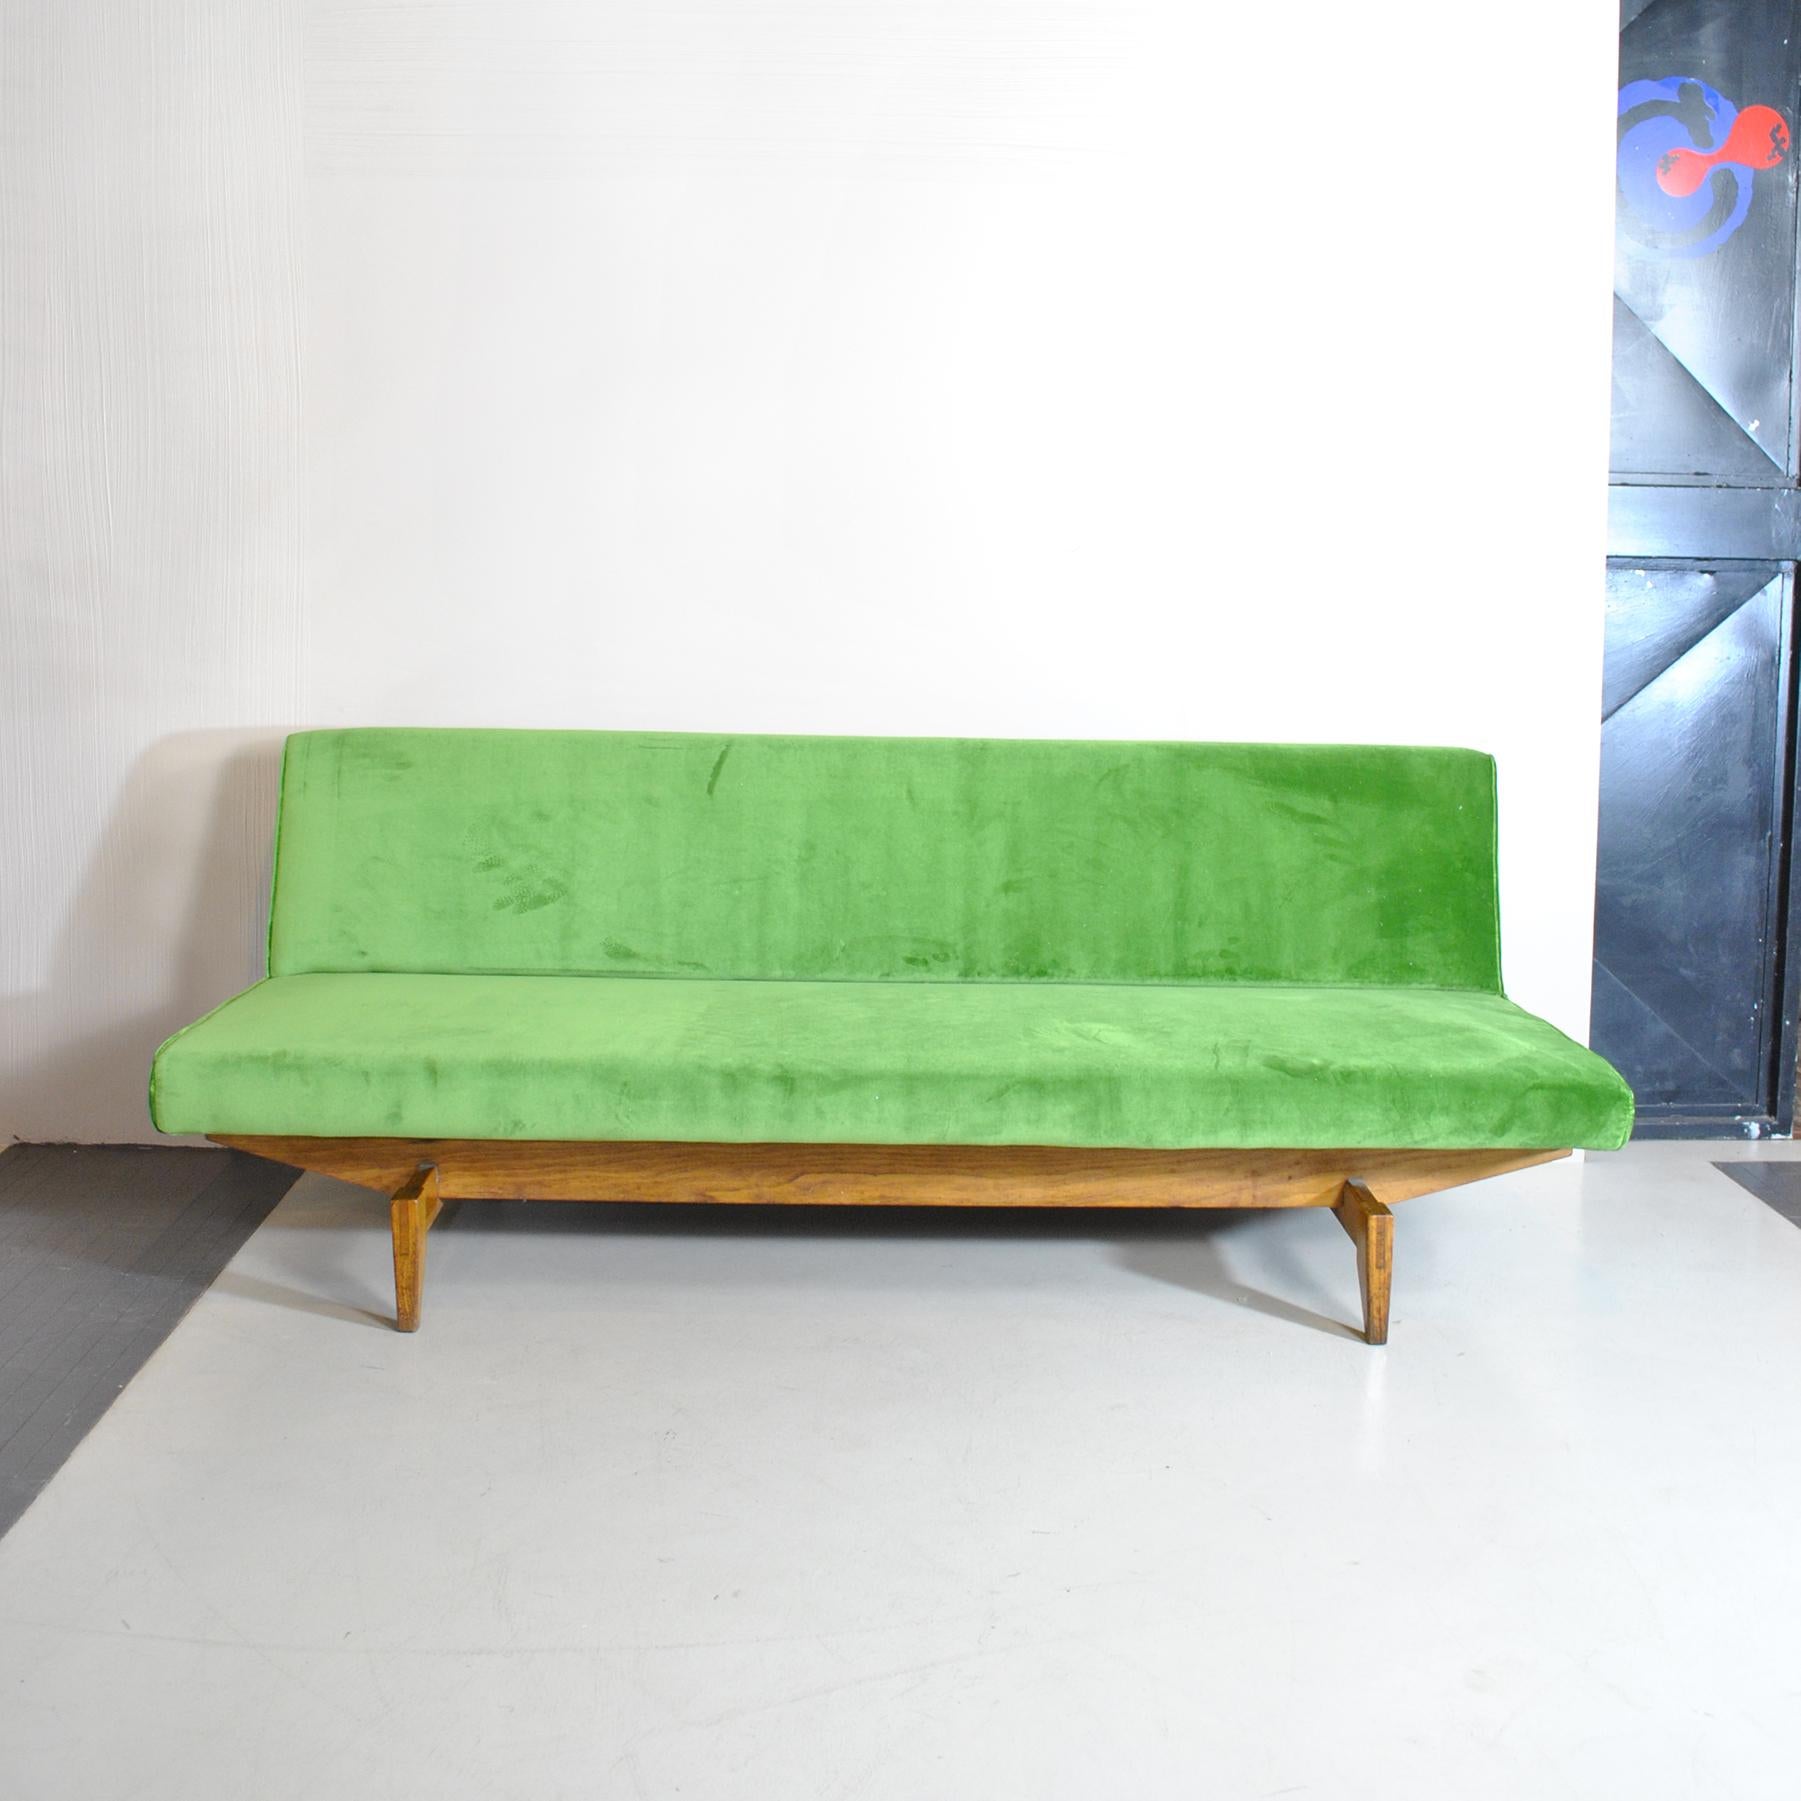 Scandinavian design teak sofa from the 1960s.